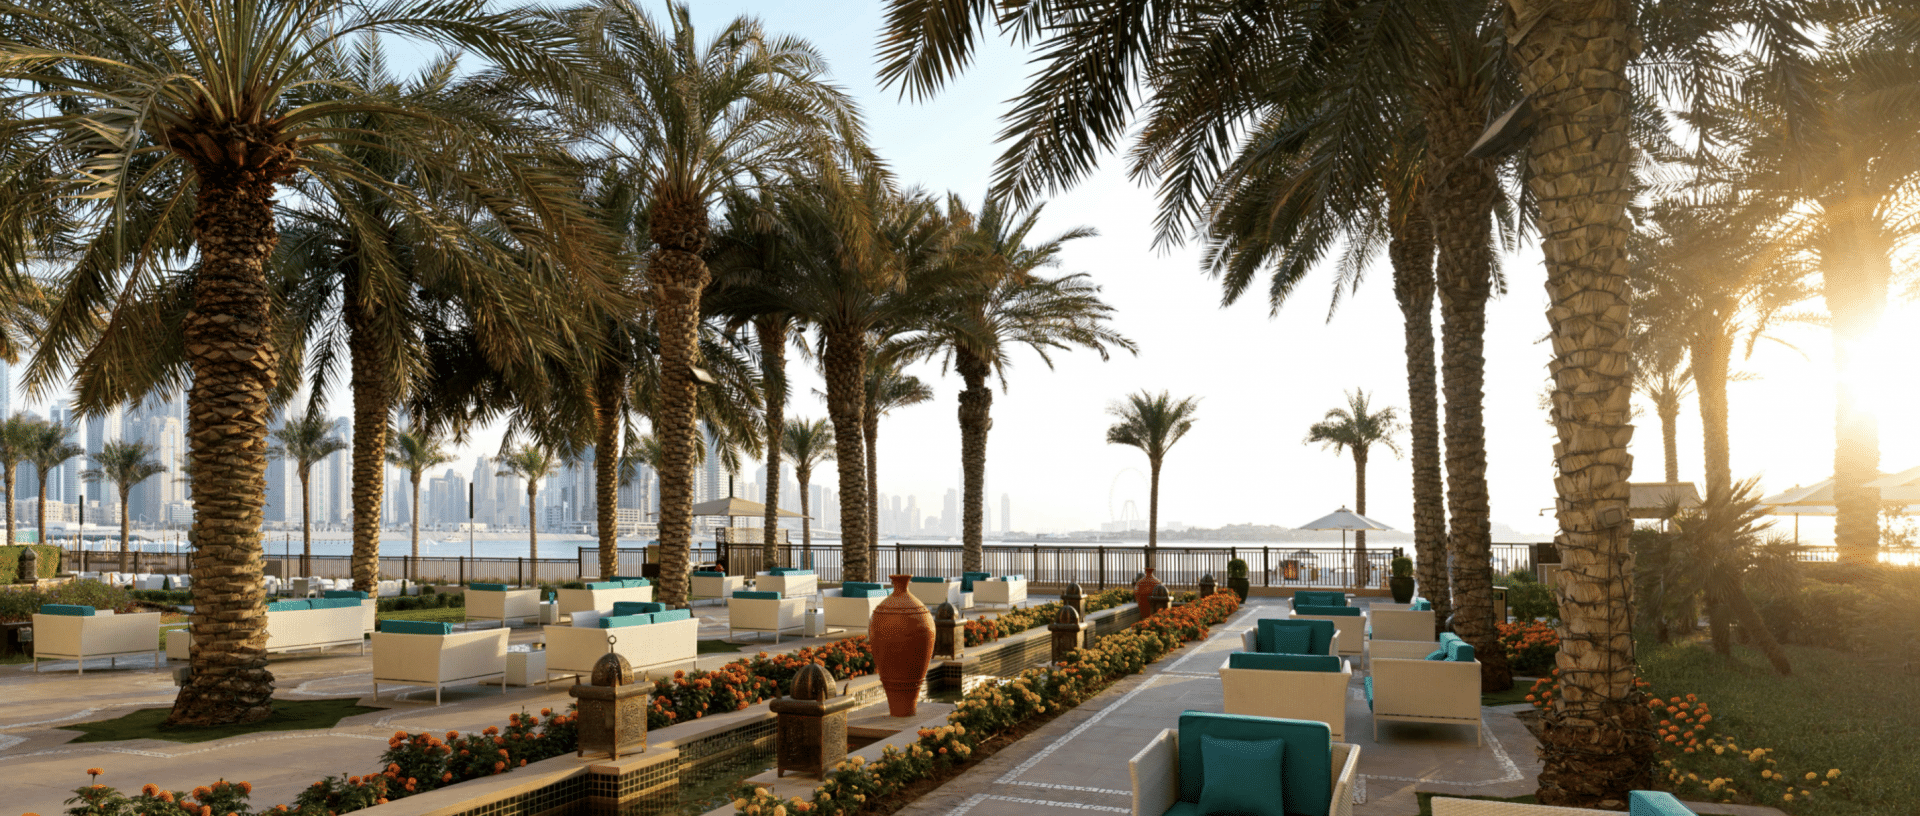 Fairmont The Palm Dubai, accor